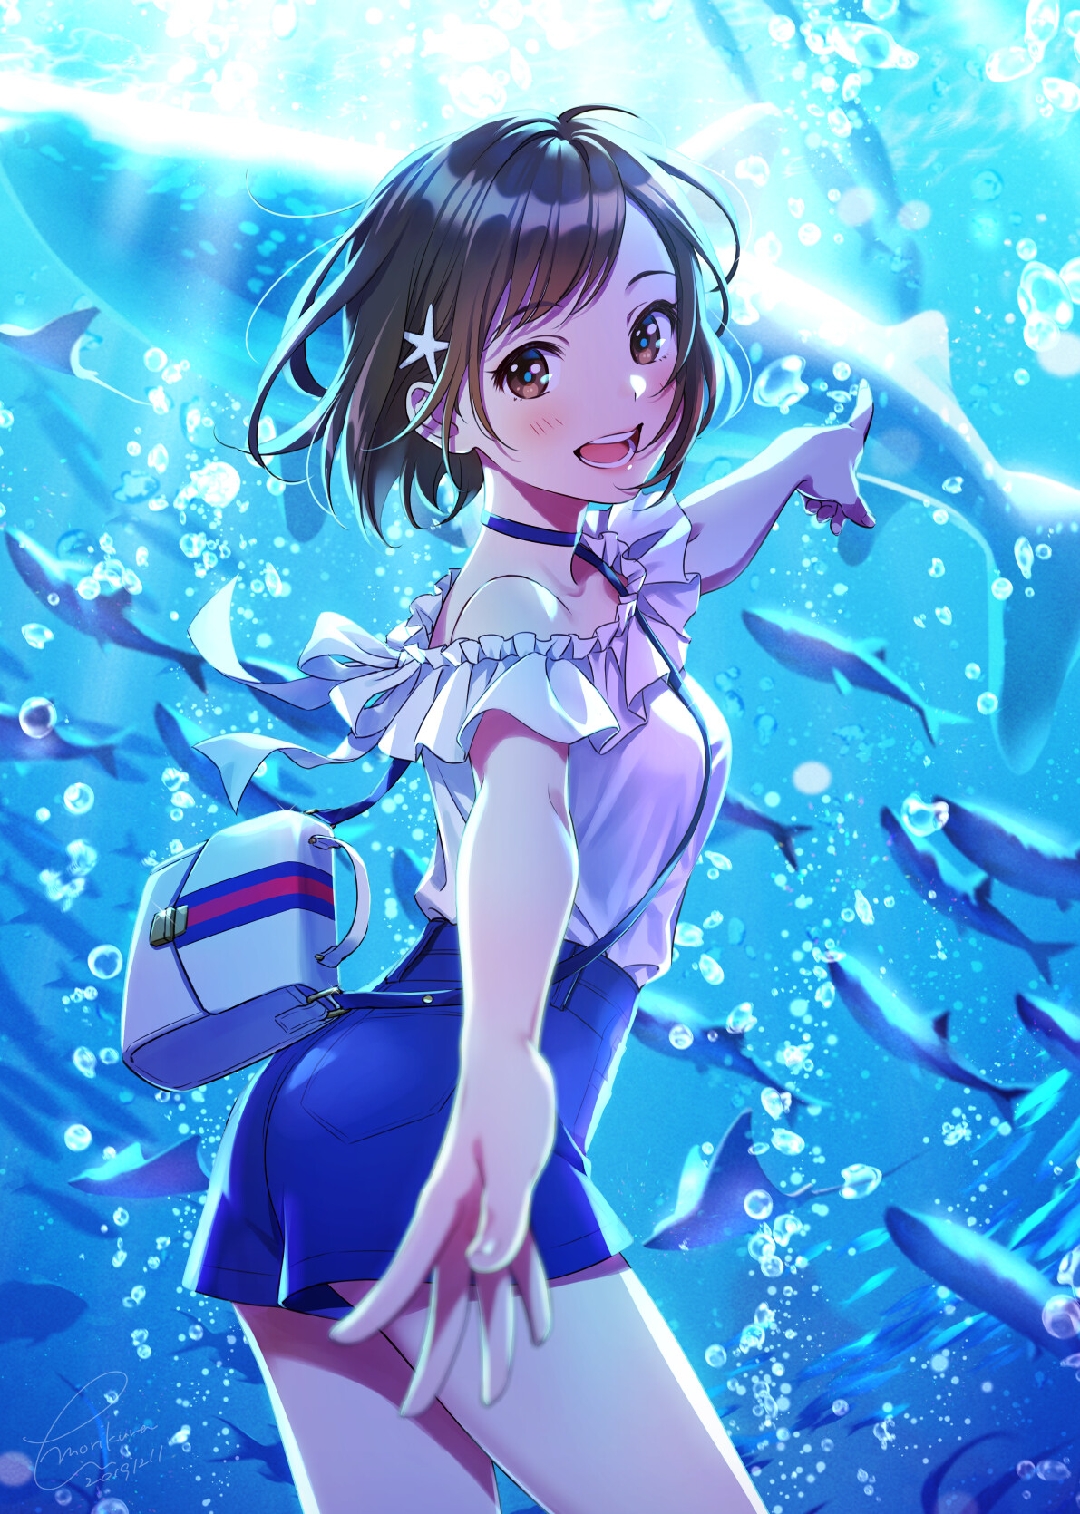 Anime Girls Aquarium Portrait Display Whale Animals Water Bubbles Purse Finger Pointing Arms Reachin 1080x1514